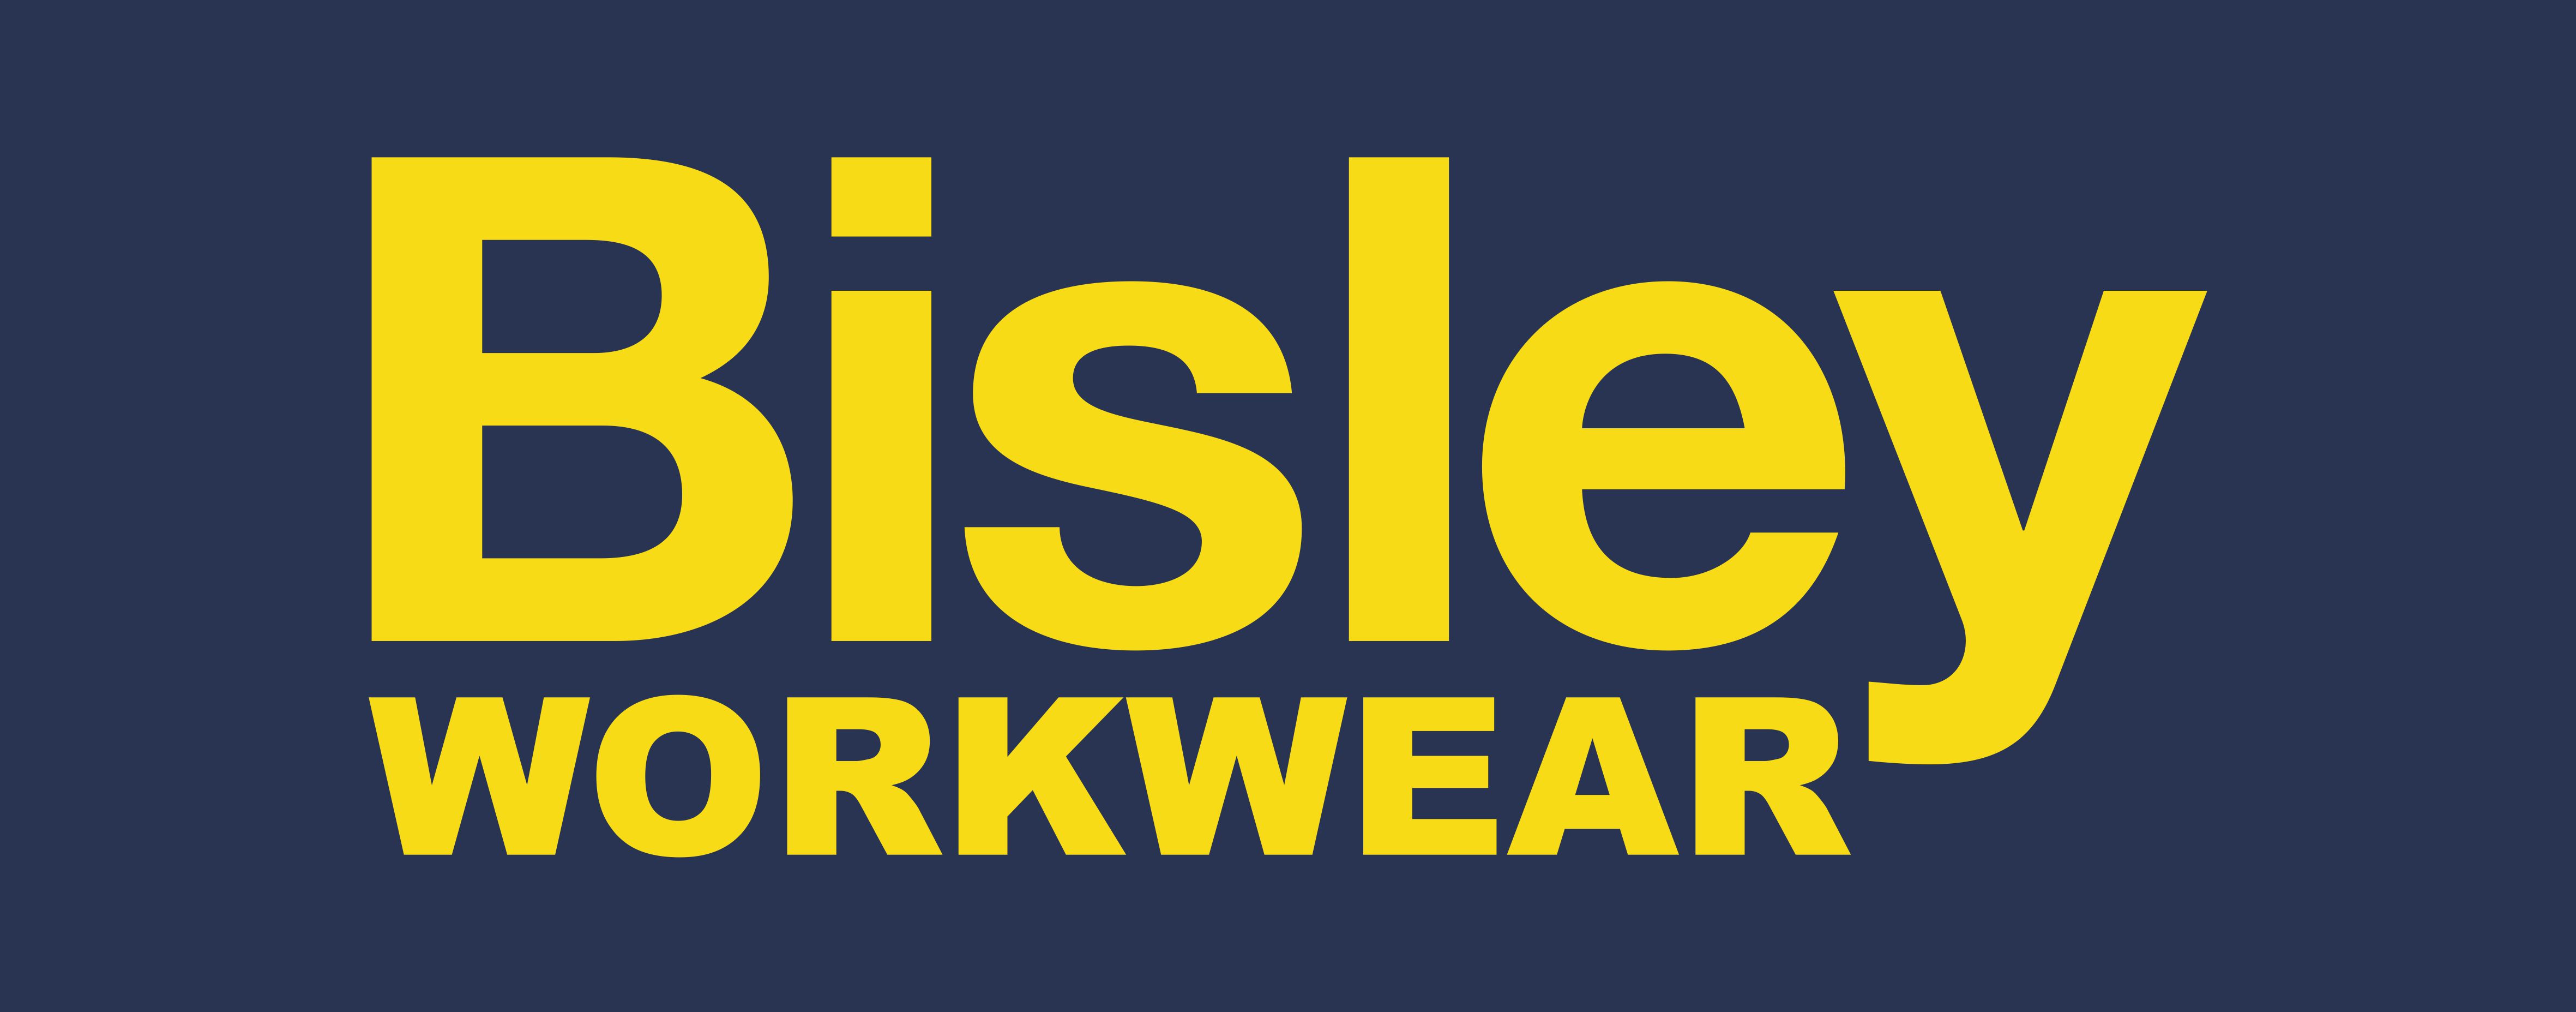 bisleyworkwear